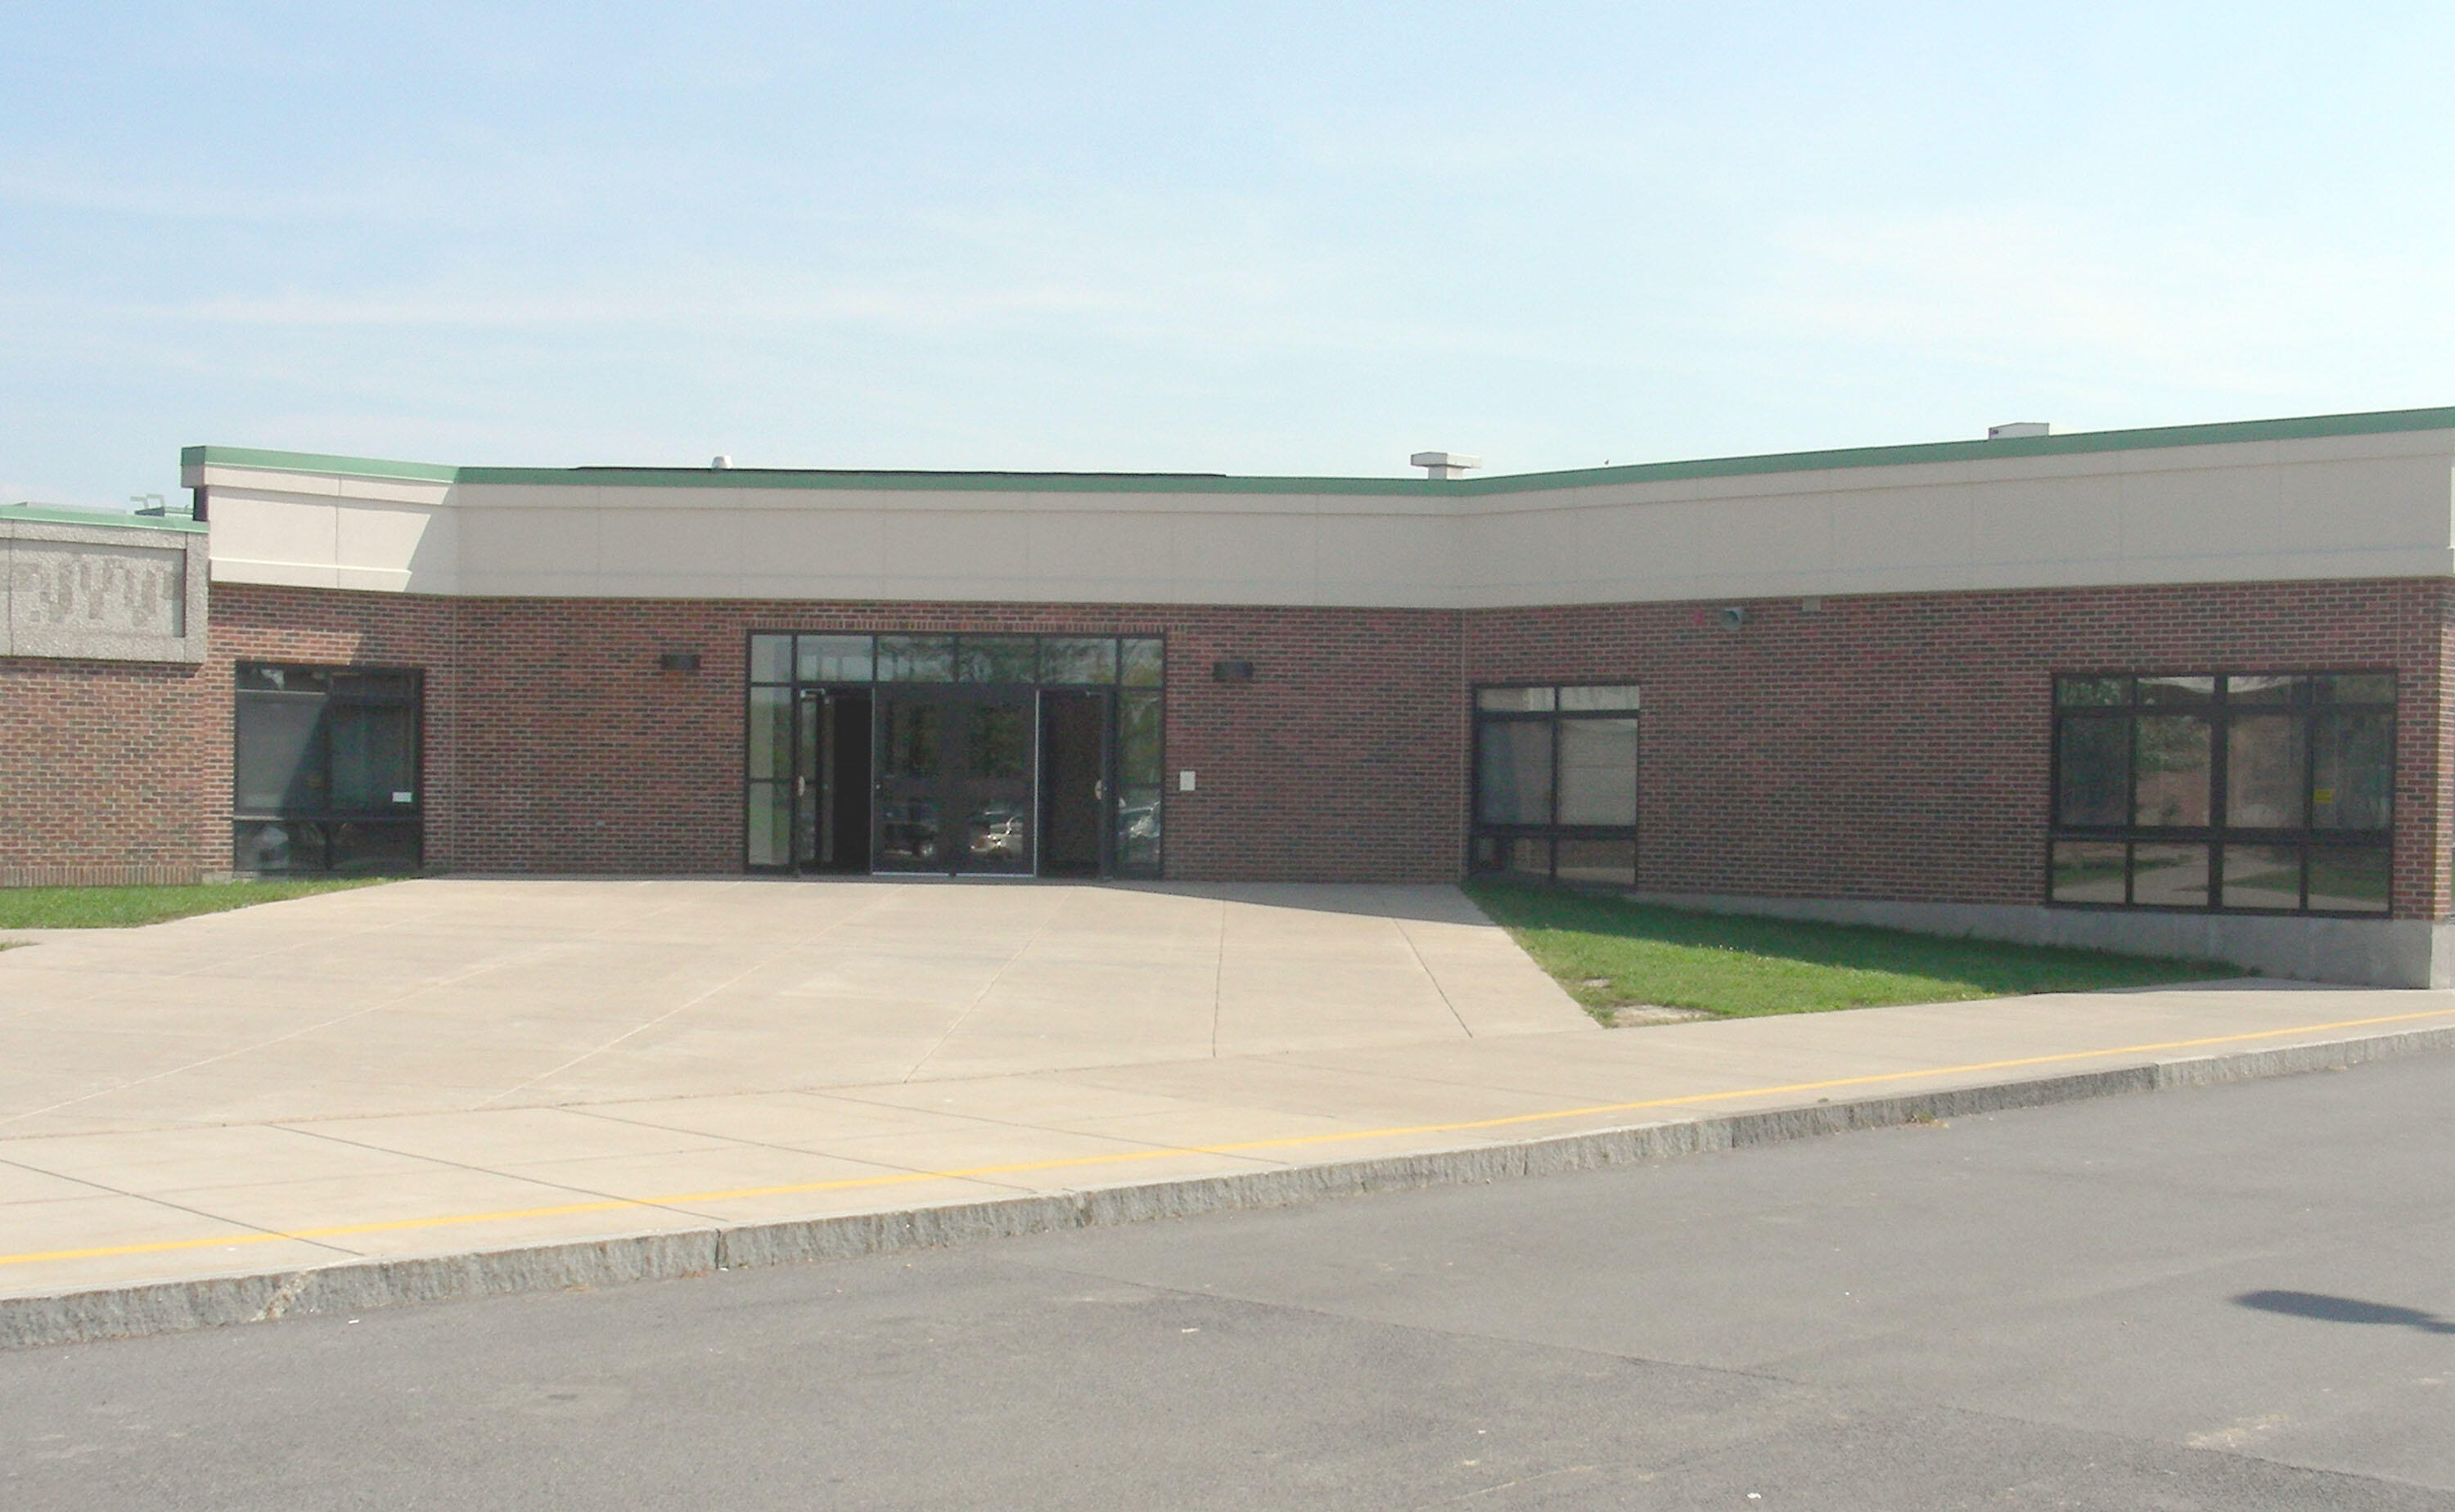 Soule Road Elementary School Building